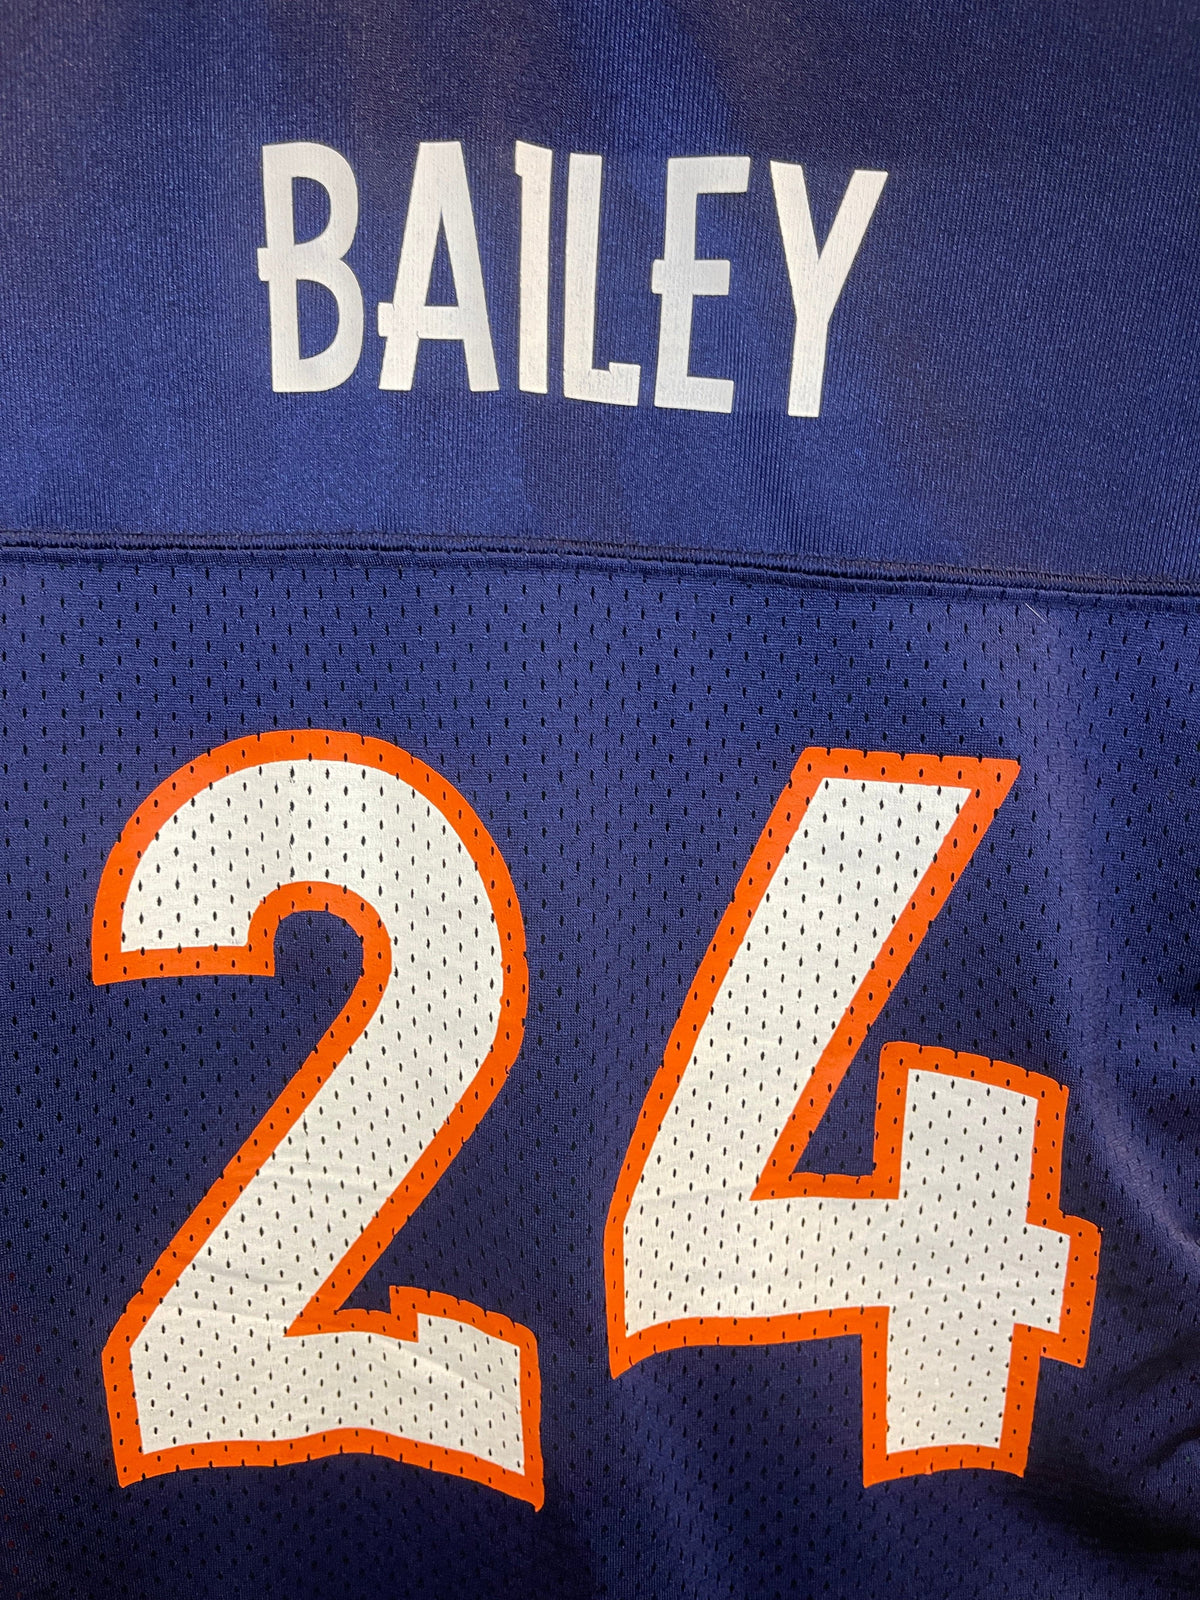 NFL Denver Broncos Champ Bailey #24 Jersey Youth Large 14-16